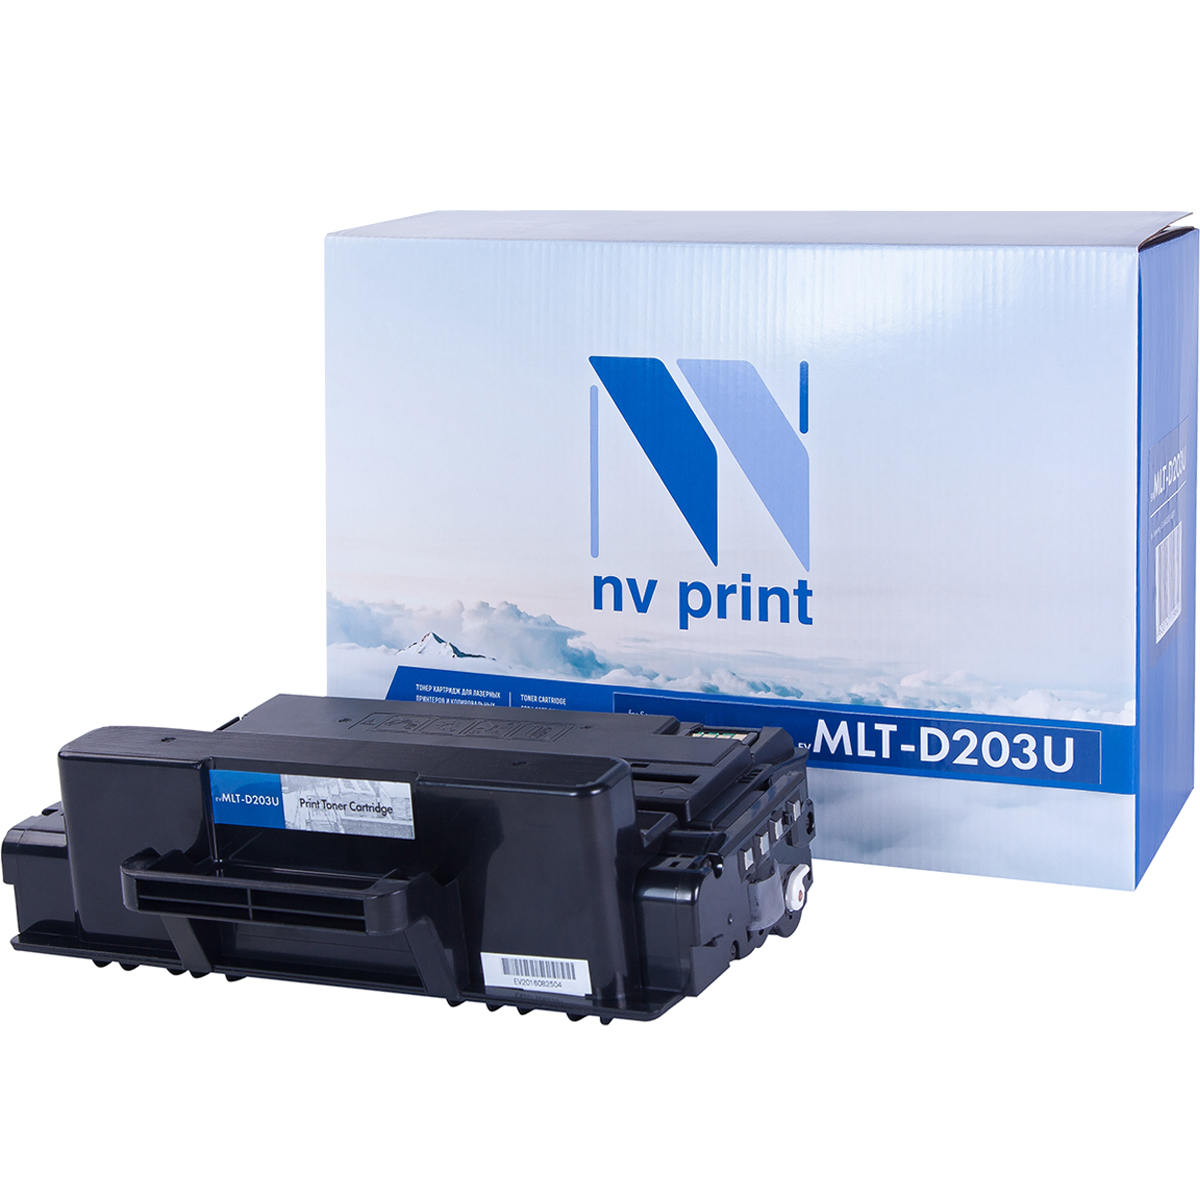 Картридж NV Print MLT-D203U для Samsung ProXpress M4020ND/M4070FR (15000k) картридж nv print mlt d203u для samsung proxpress m4020nd m4070fr 15000k черный